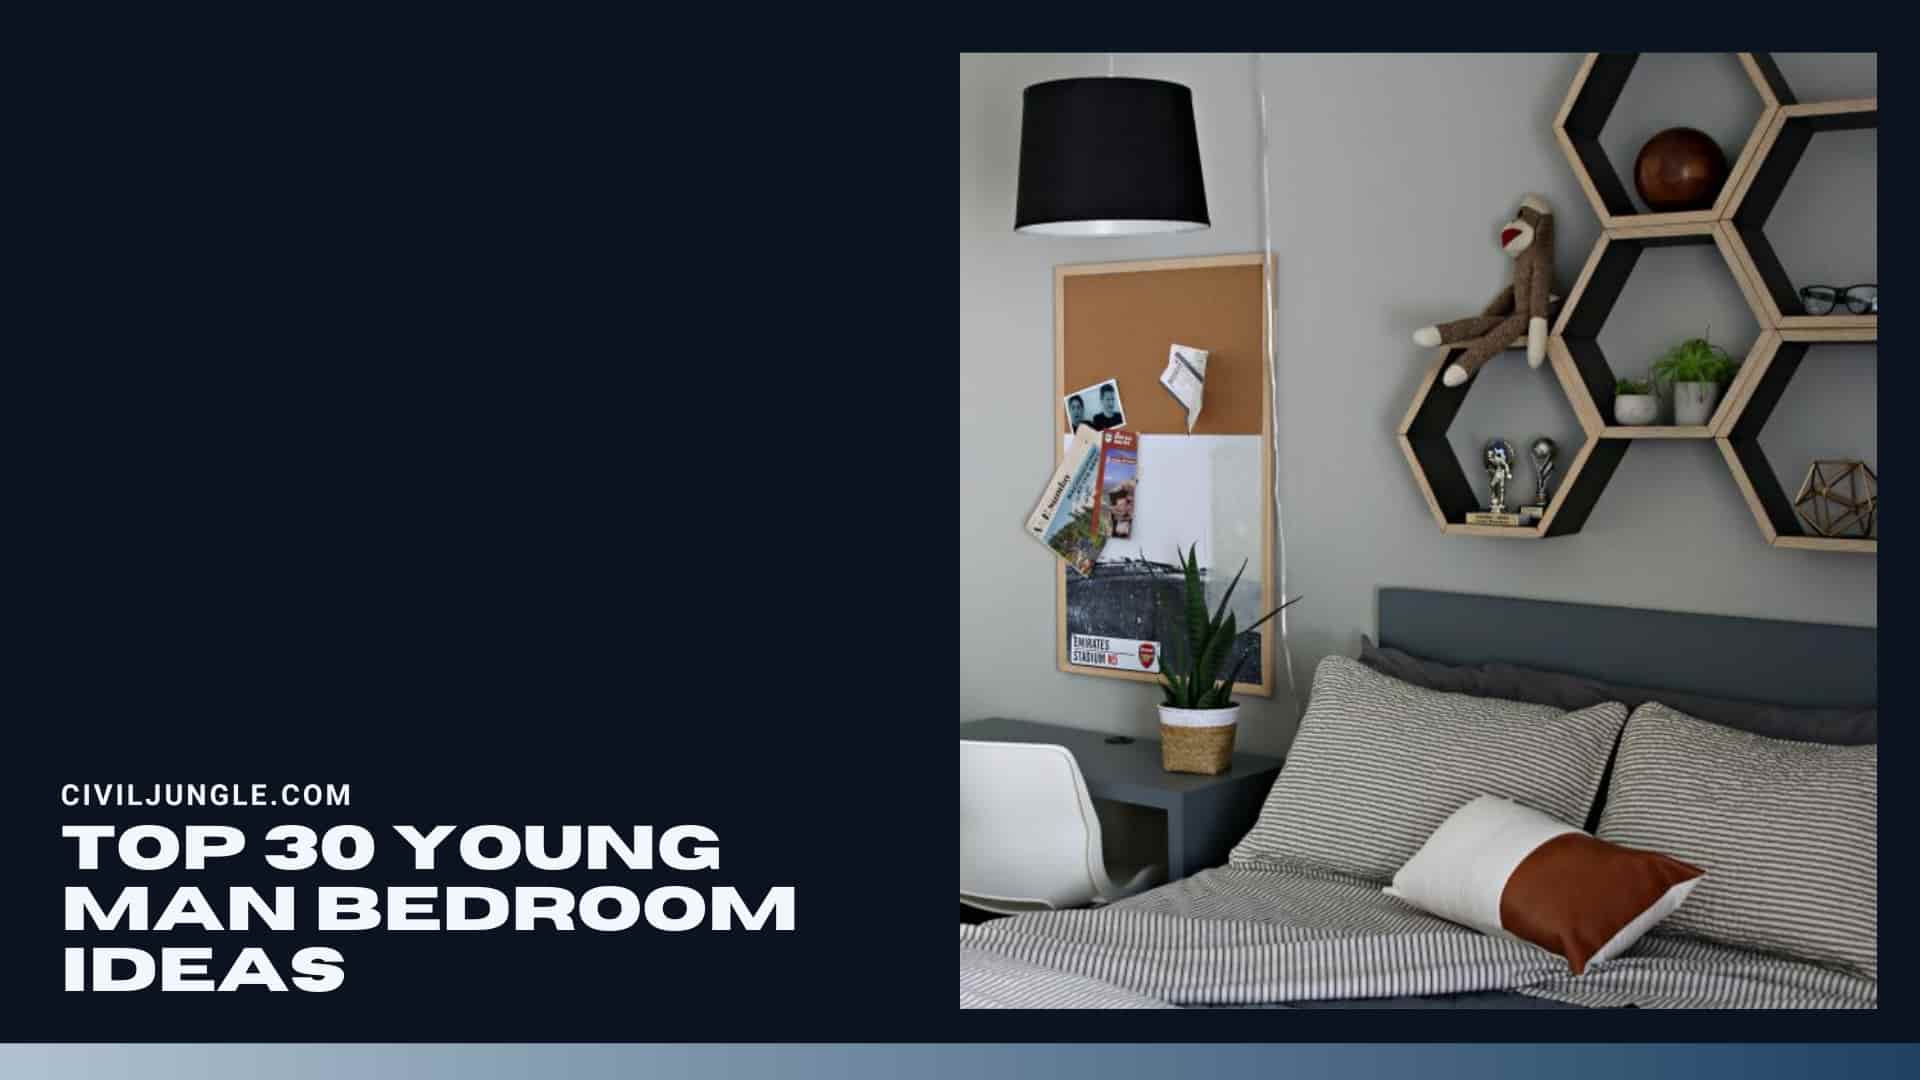 Top 30 Young Man Bedroom Ideas